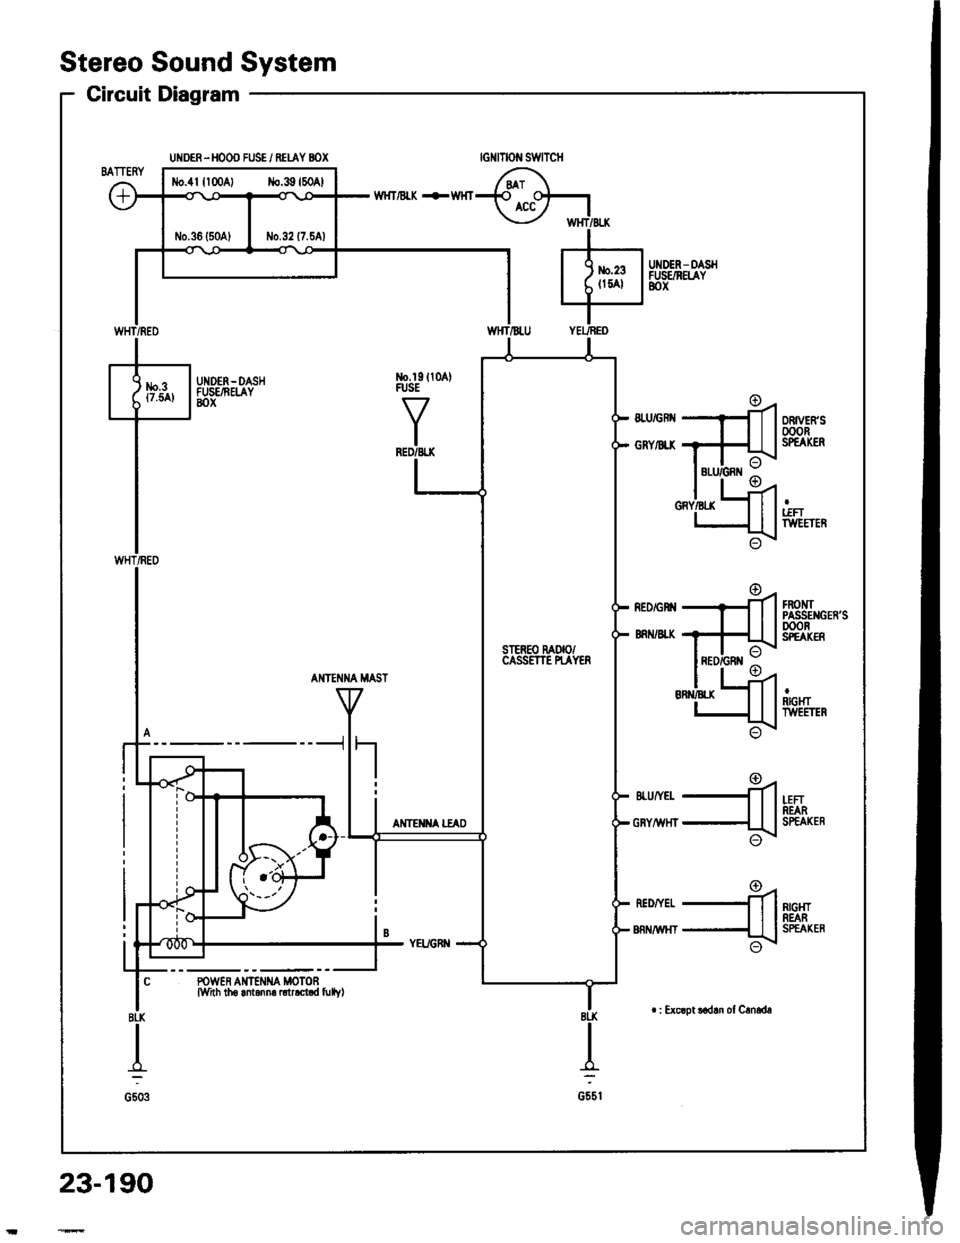 HONDA INTEGRA 1994 4.G Owners Manual tlo.4lllo0Al No.39l50Al
SIER€O MOOCASSETTE N.AYER
Stereo Sound System
UNDER-HOOO FUSE i RETAY BOX
Circuit Diagram
UNDEN-DASHFUSENEIAY8ox
tGNtTOt{ SWTTCH
WHT/BI"K +WHT
No.l9ll0AlRJSE
AI{TE?{NA MAST
-